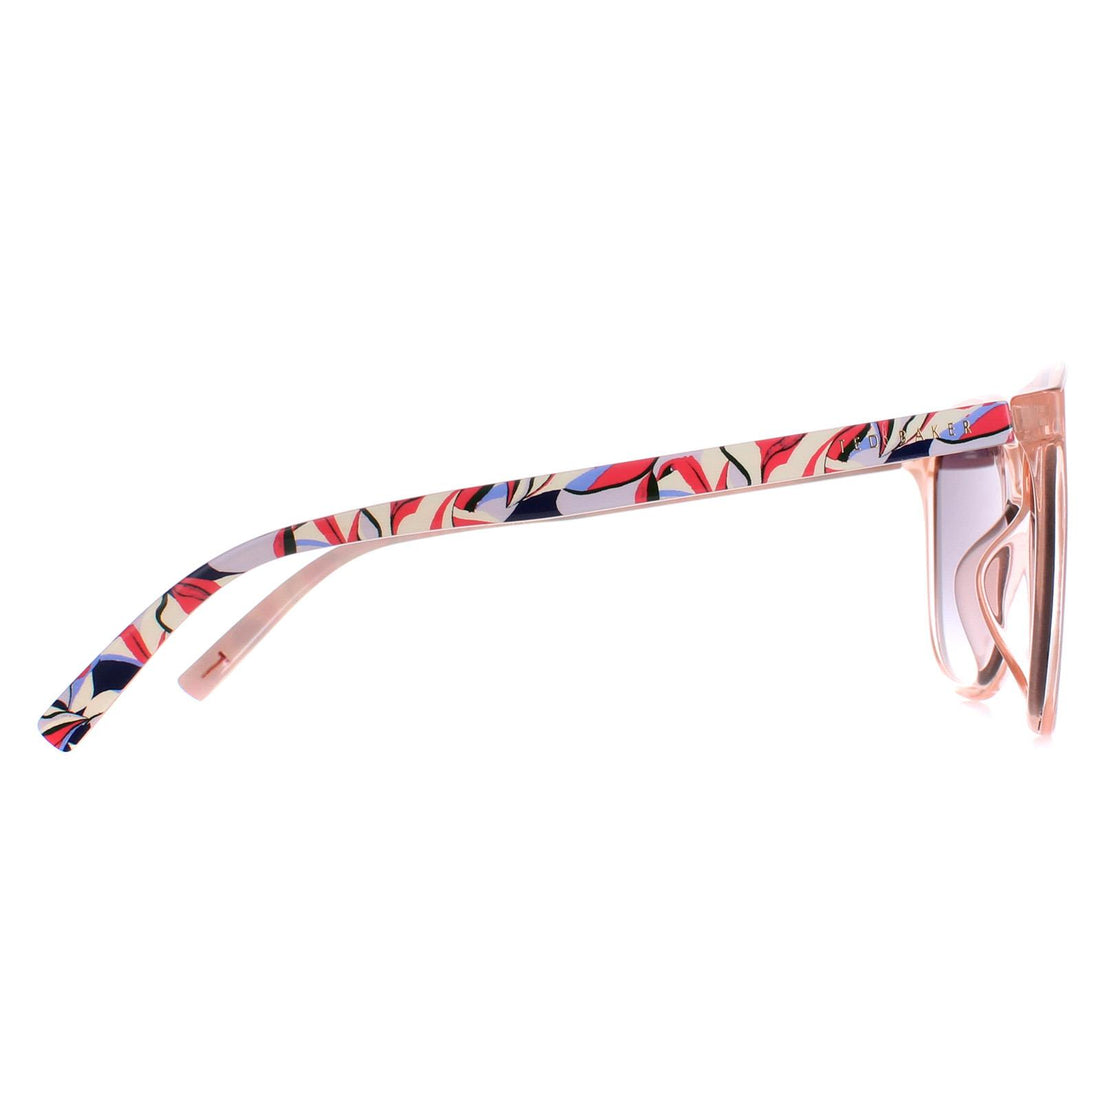 Ted Baker Sunglasses TB1646 Delfi 203 Transparent Pink Grey Gradient